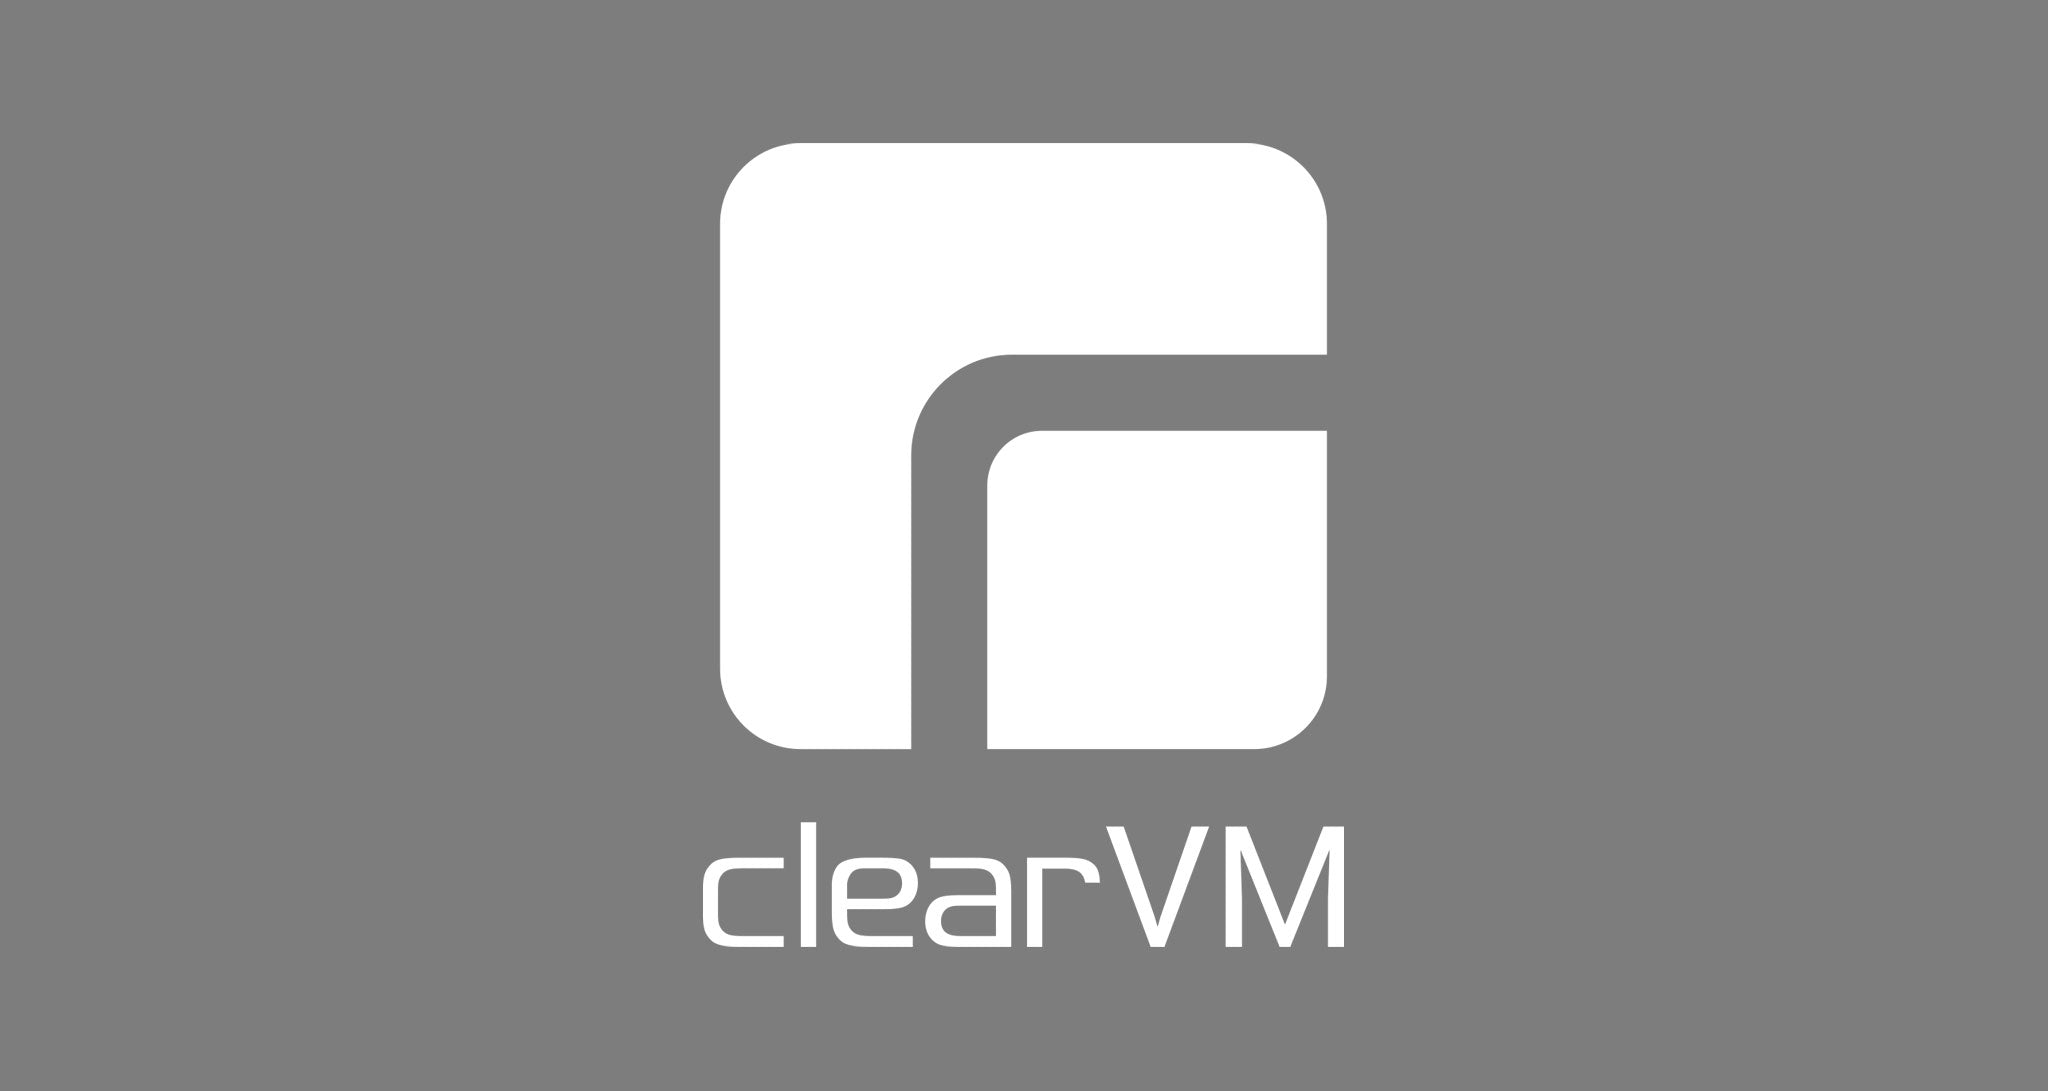 Original ClearVM End-of-Support Notice